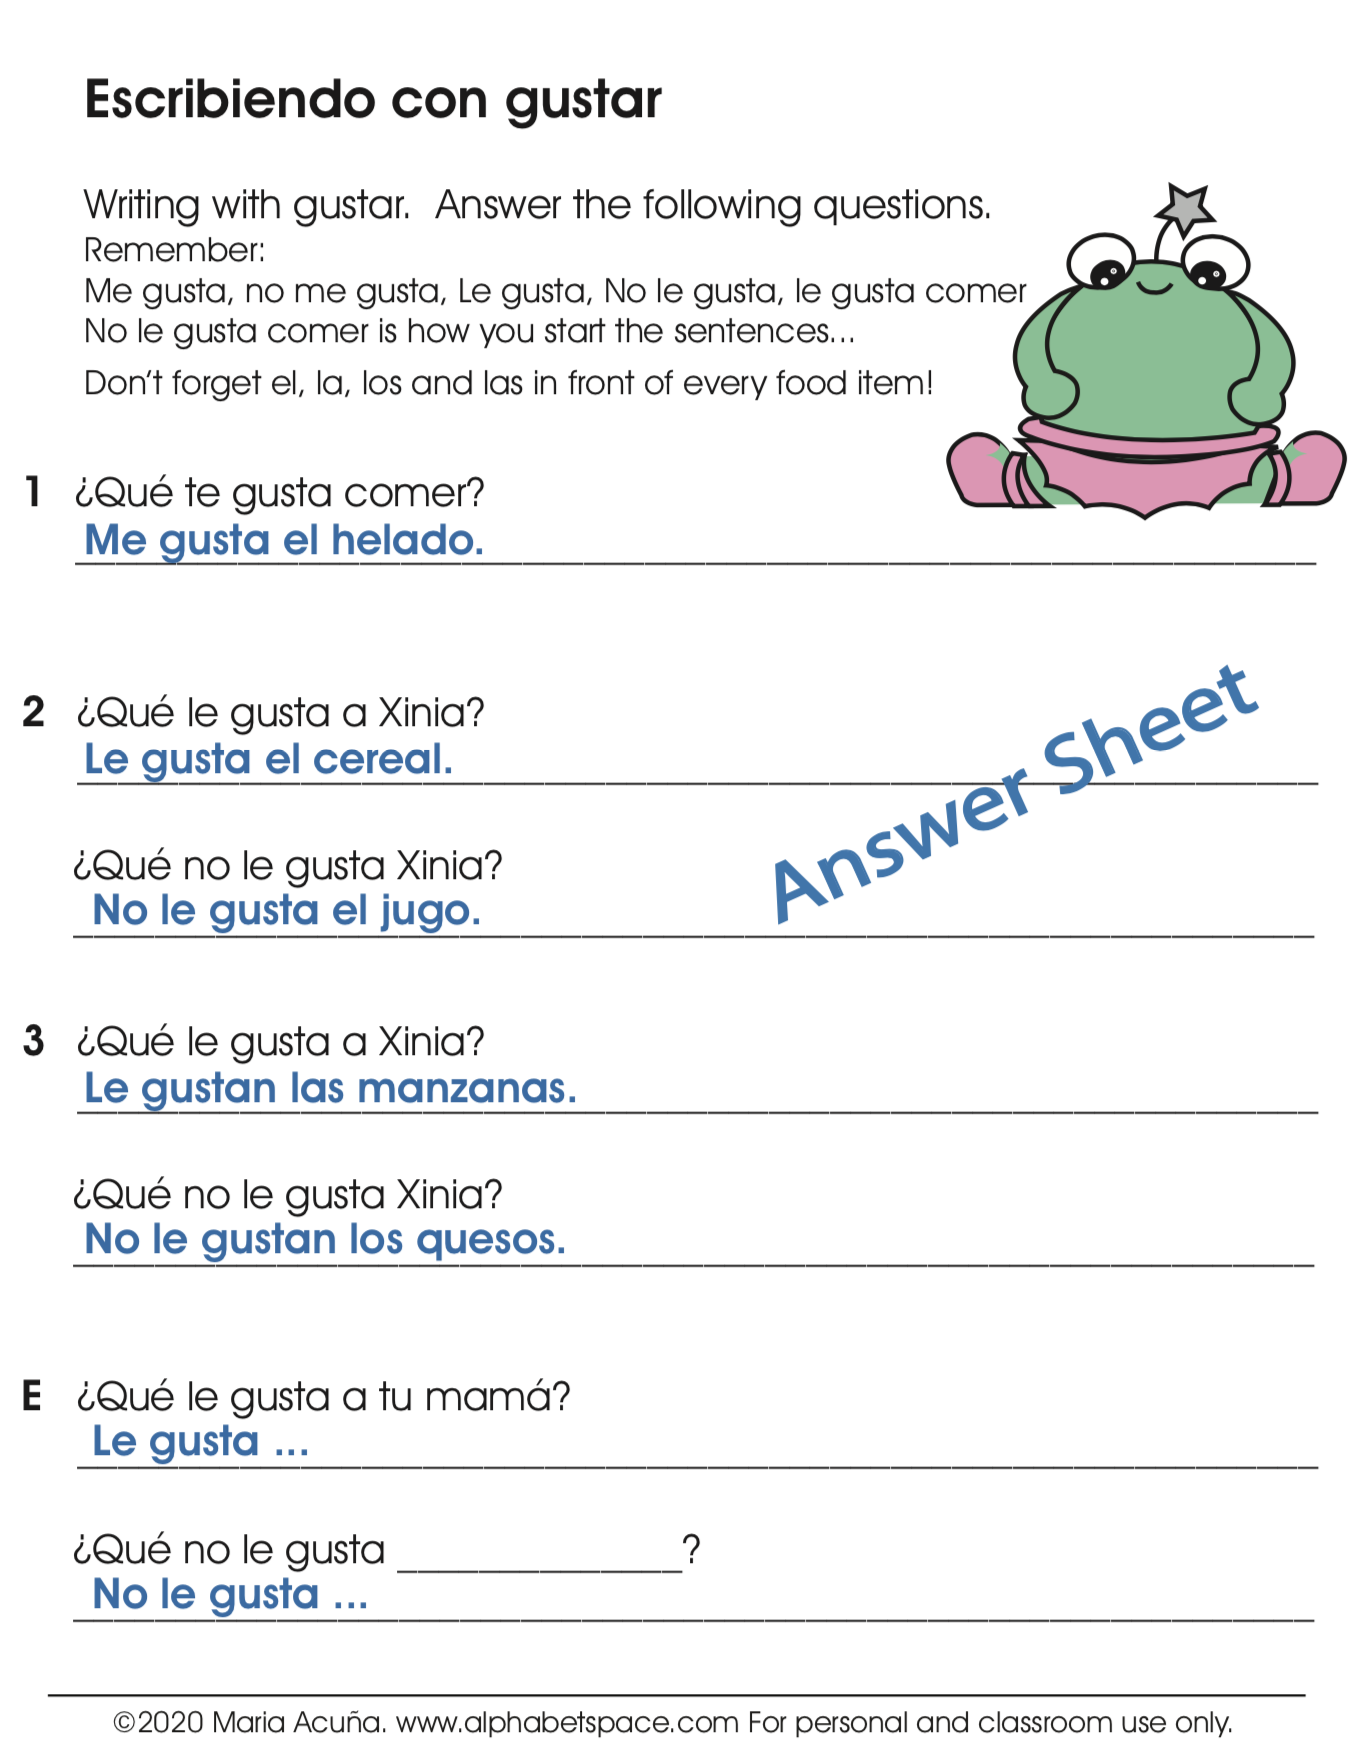 el-verbo-gustar-to-like-spanish-for-children